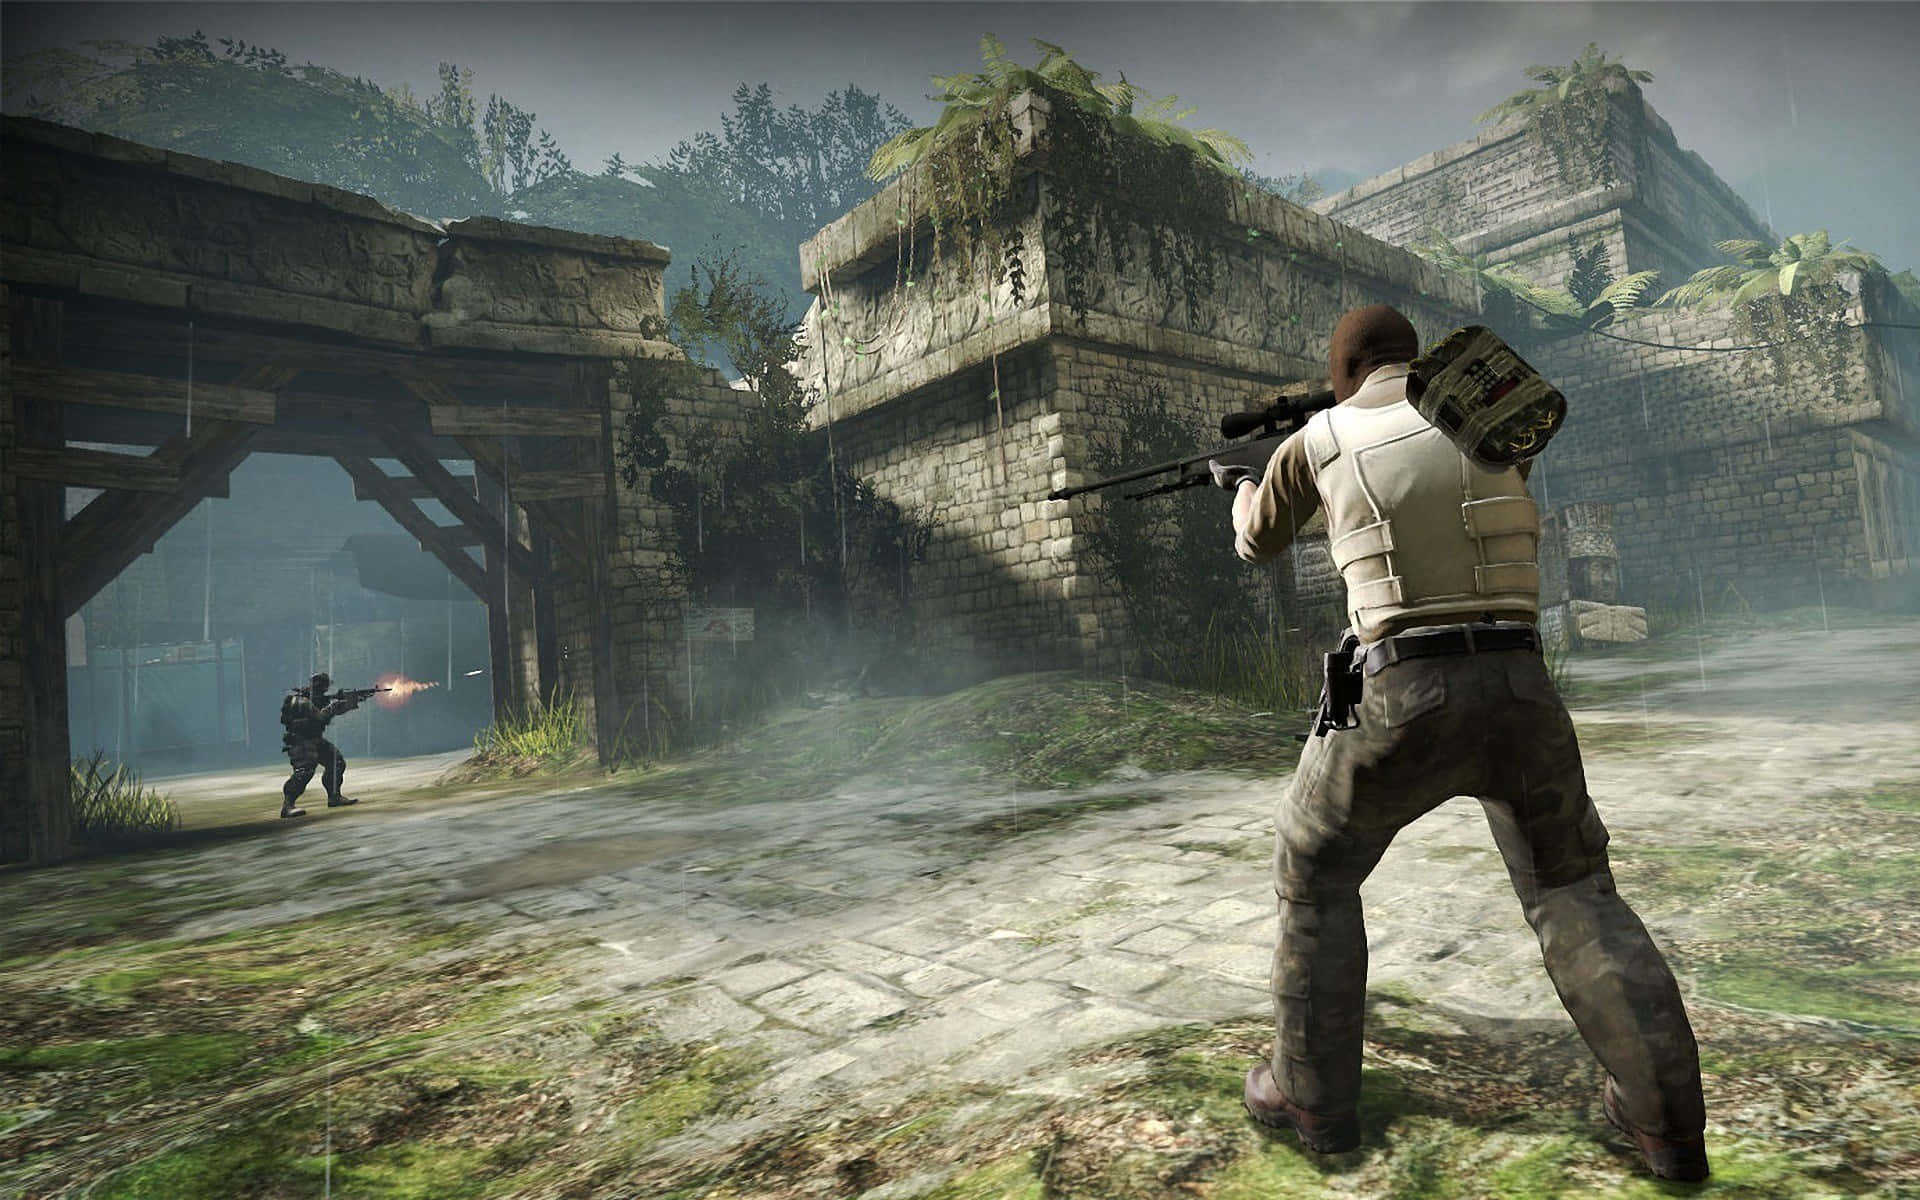 A Man Is Shooting A Gun In A Video Game